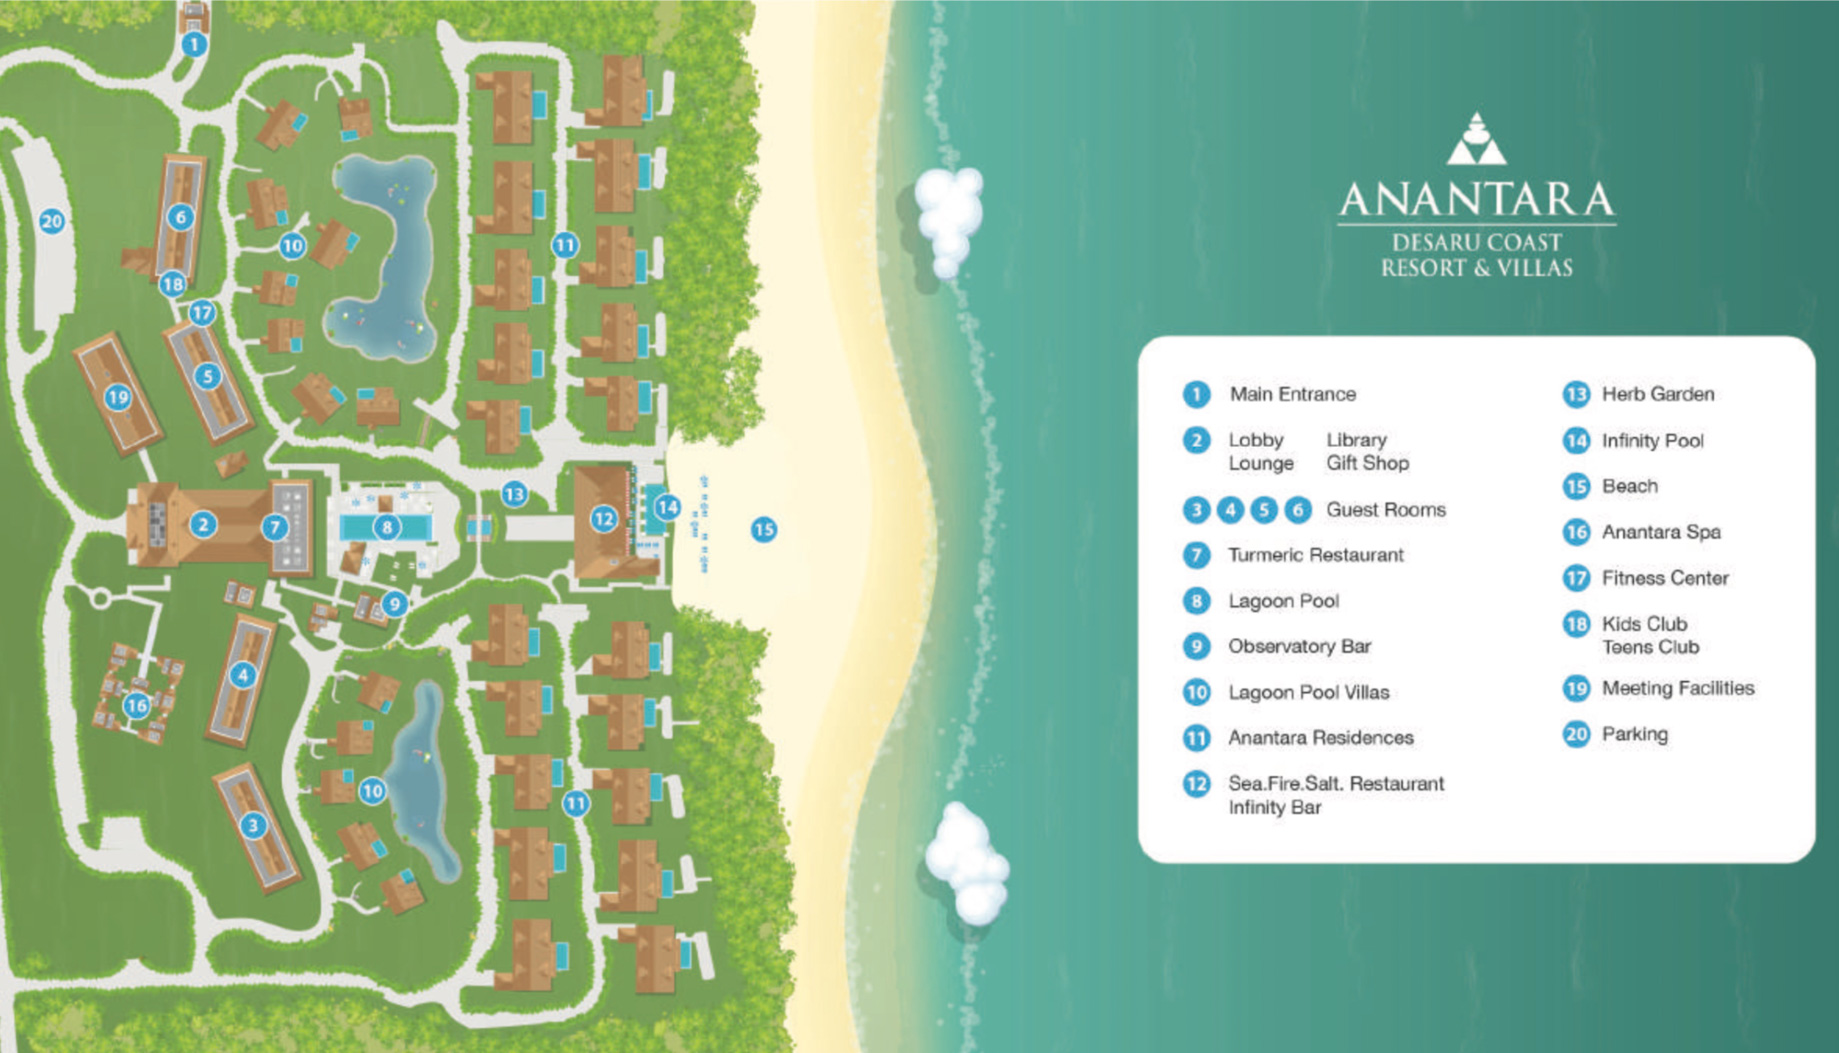 Anantara Desaru Coast Resort & Villas – Johor, Malaysia – Map